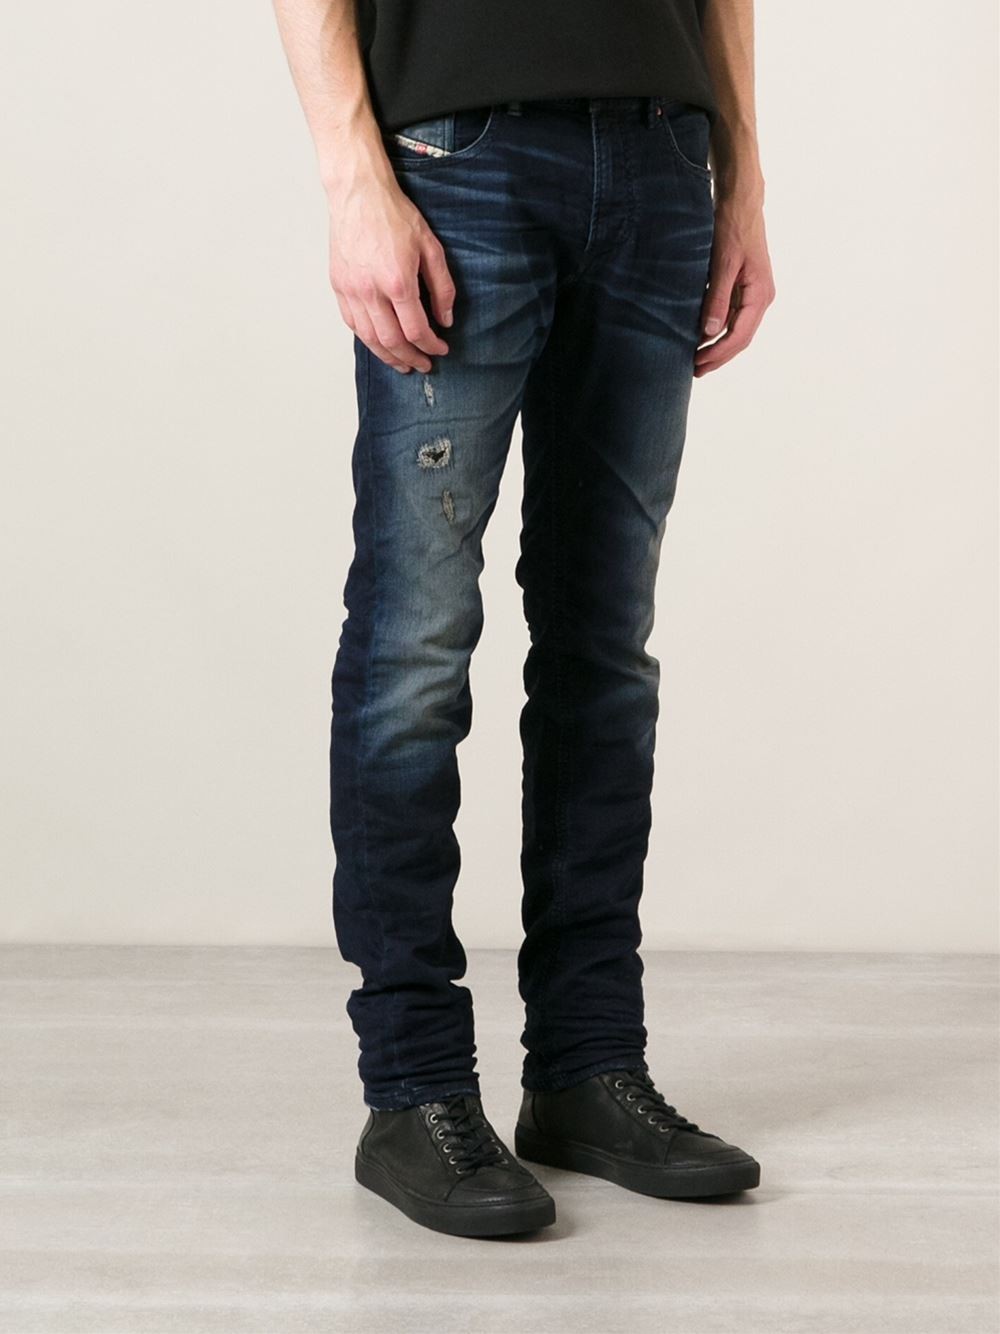 Lyst - Diesel 'Thavar' Slim Fit Jeans in Blue for Men